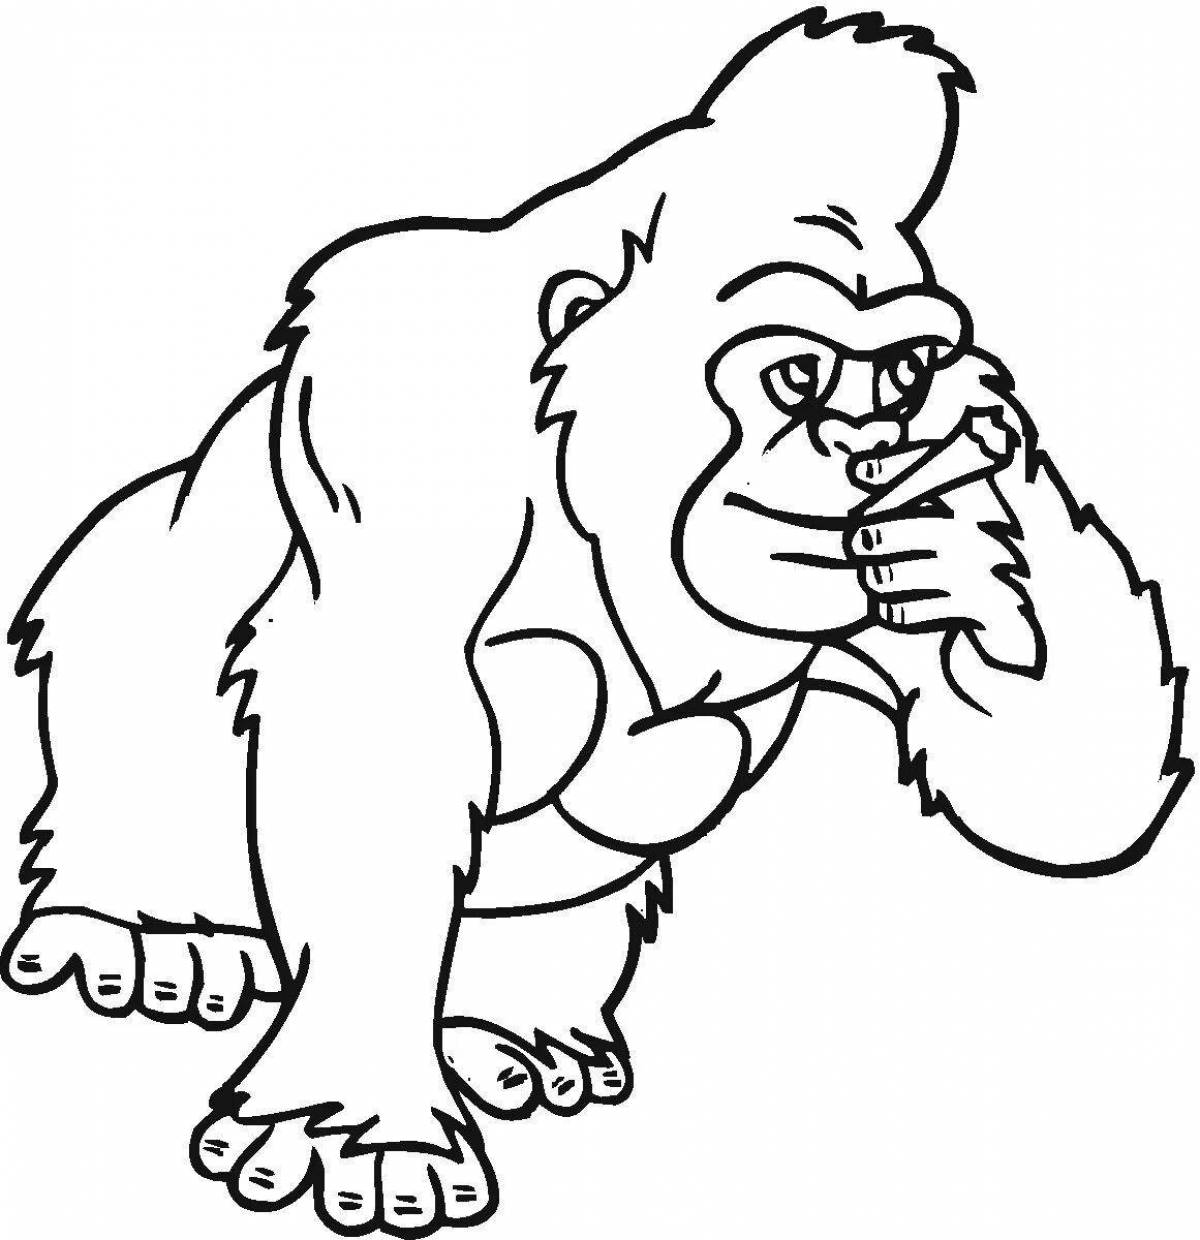 A fun gorilla coloring book for kids